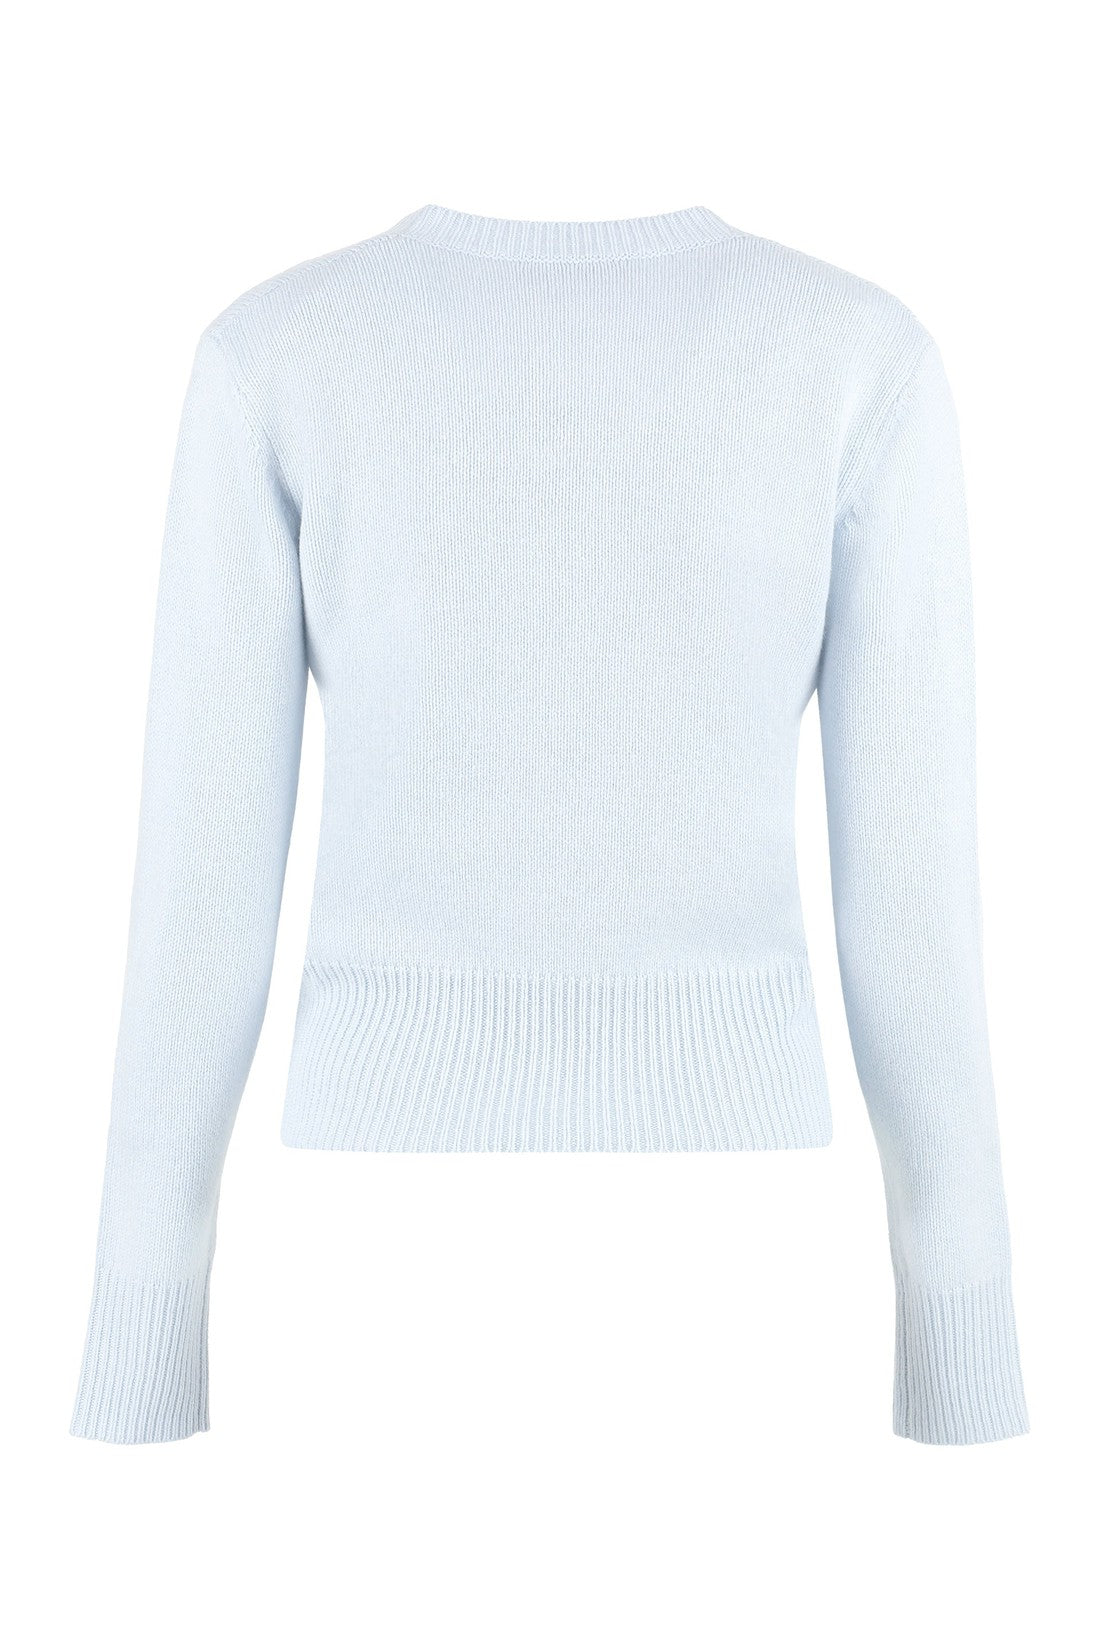 Max Mara Studio-OUTLET-SALE-Cashmere V-neck sweater-ARCHIVIST